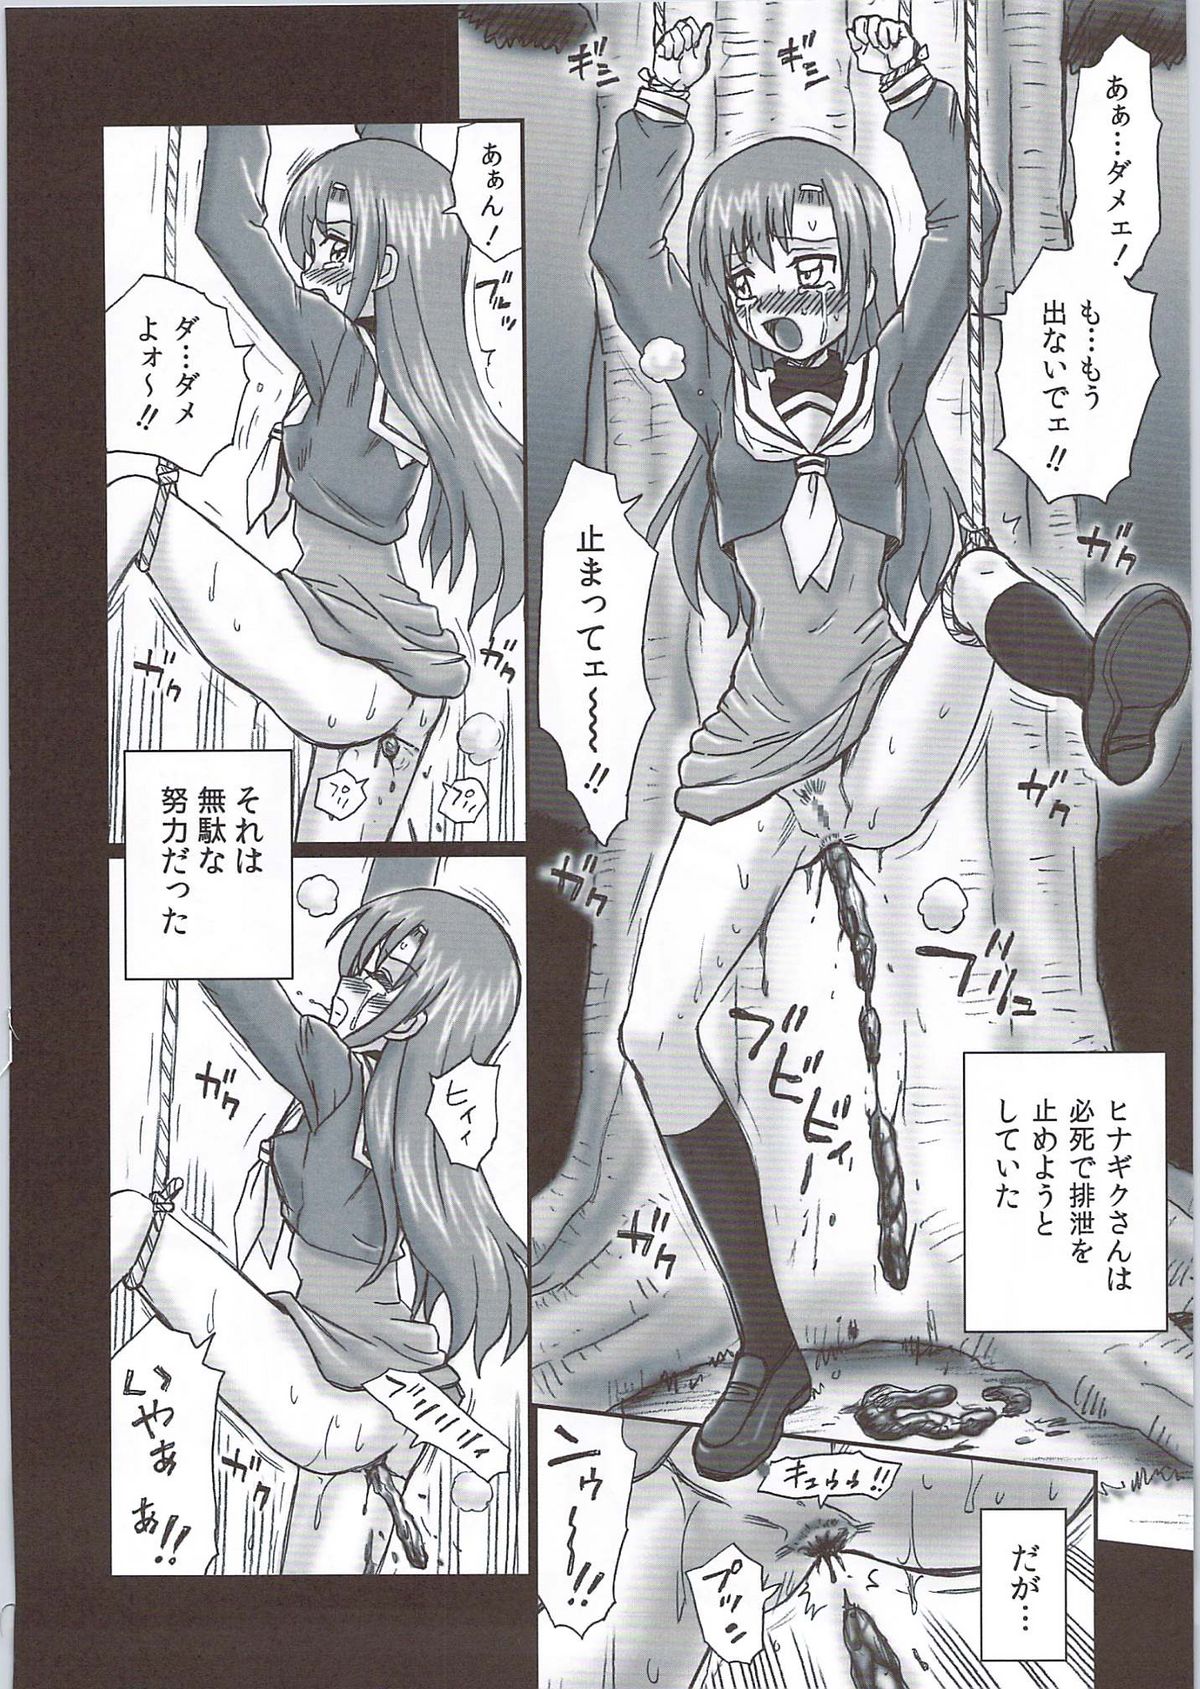 (COMIC1☆4) [Rat Tail (Irie Yamazaki)] TAIL-MAN HAYATE BOOK (Hayate no Gotoku!) (COMIC1☆04) [RAT TAIL (Irie Yamazaki)] TAIL-MAN HAYATE BOOK (ハヤテのごとく!)